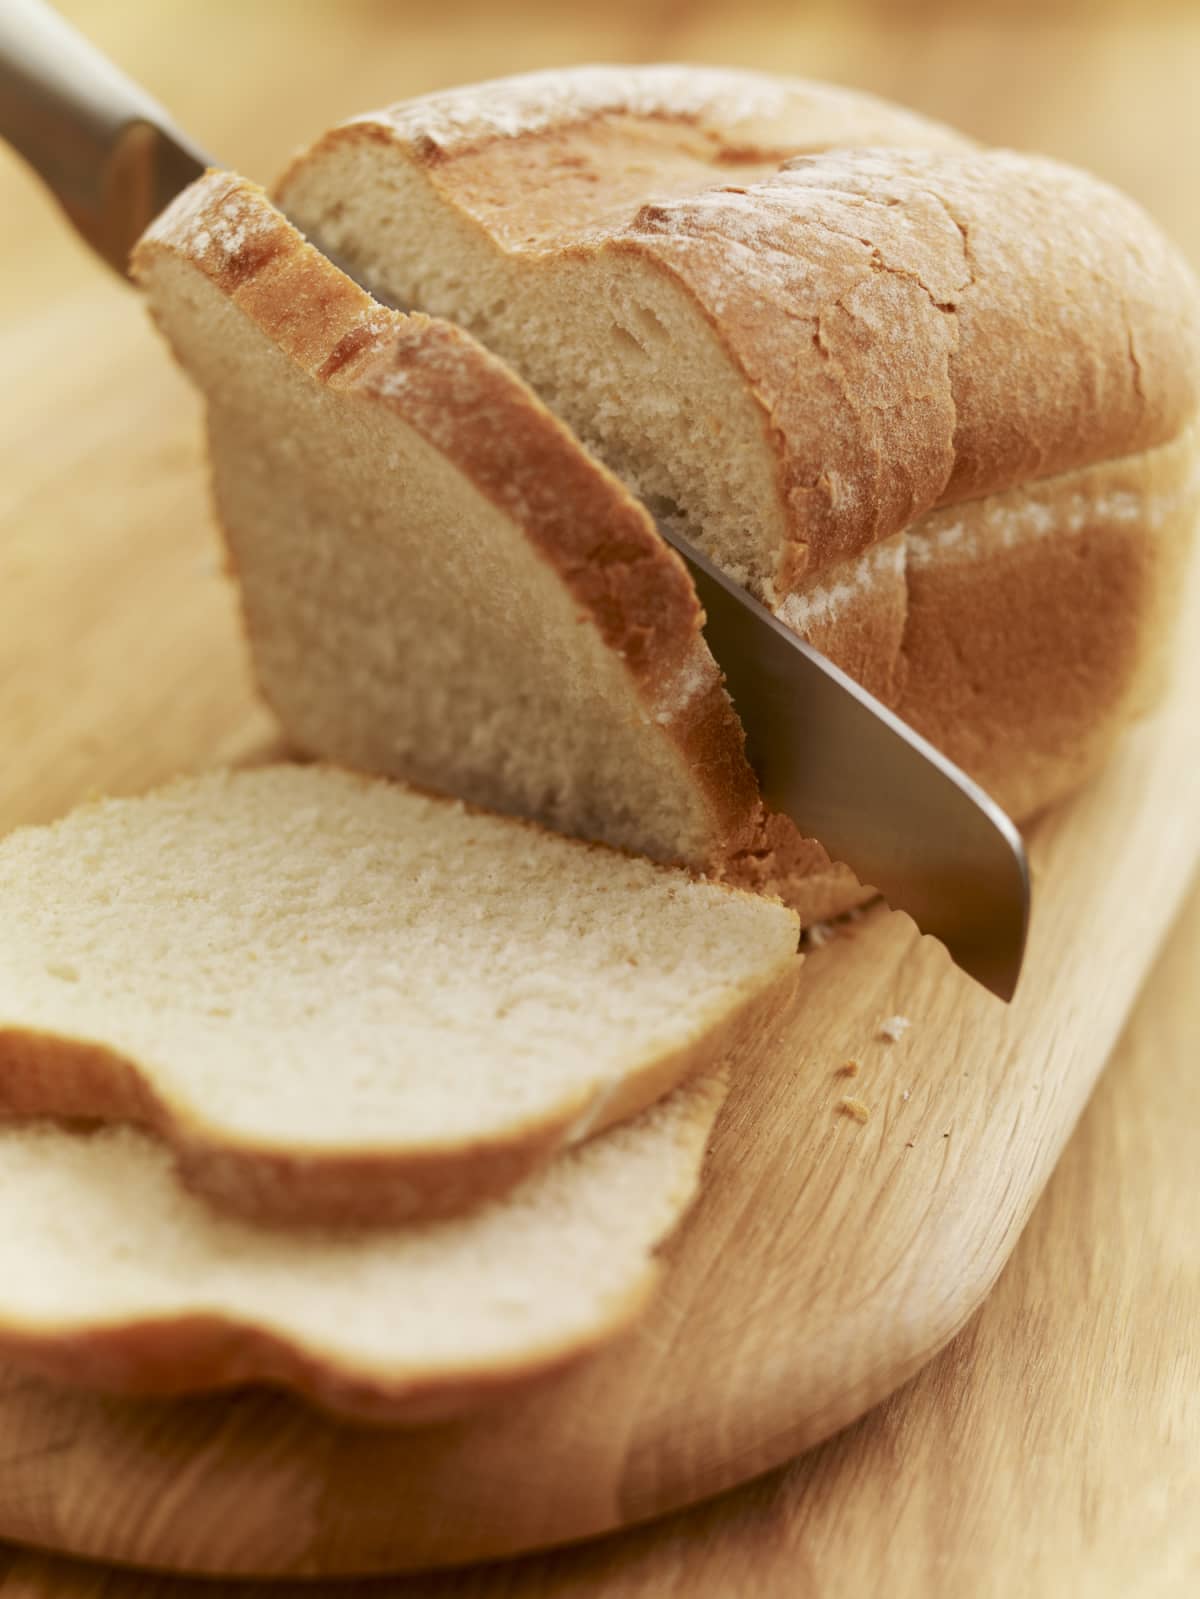 Knife slicing a loaf of bread